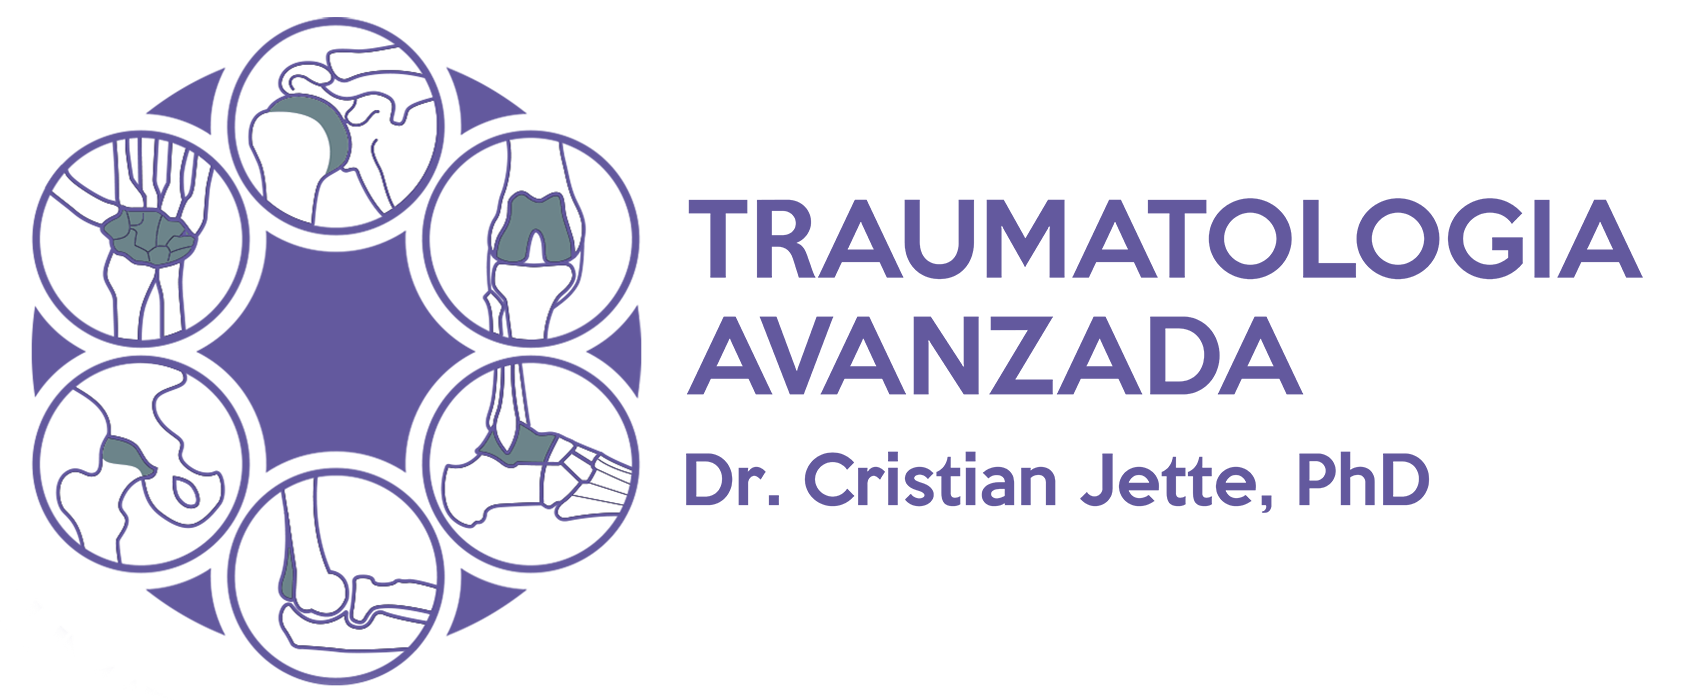 Dr. Cristian Jette, PhD